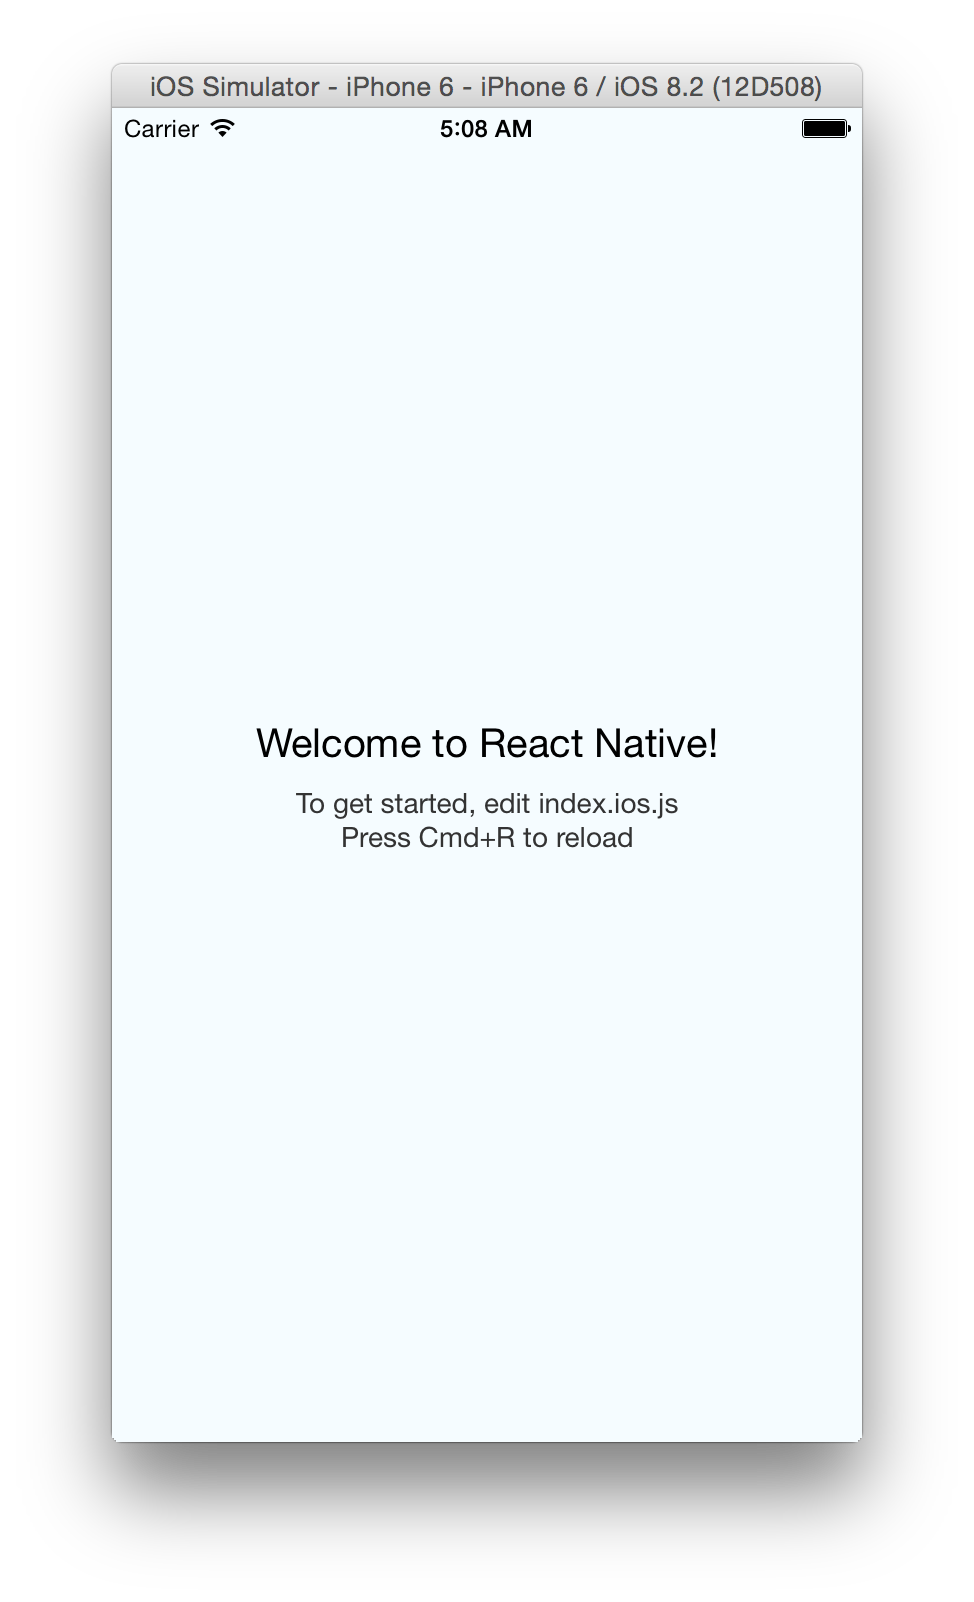 react-native.png